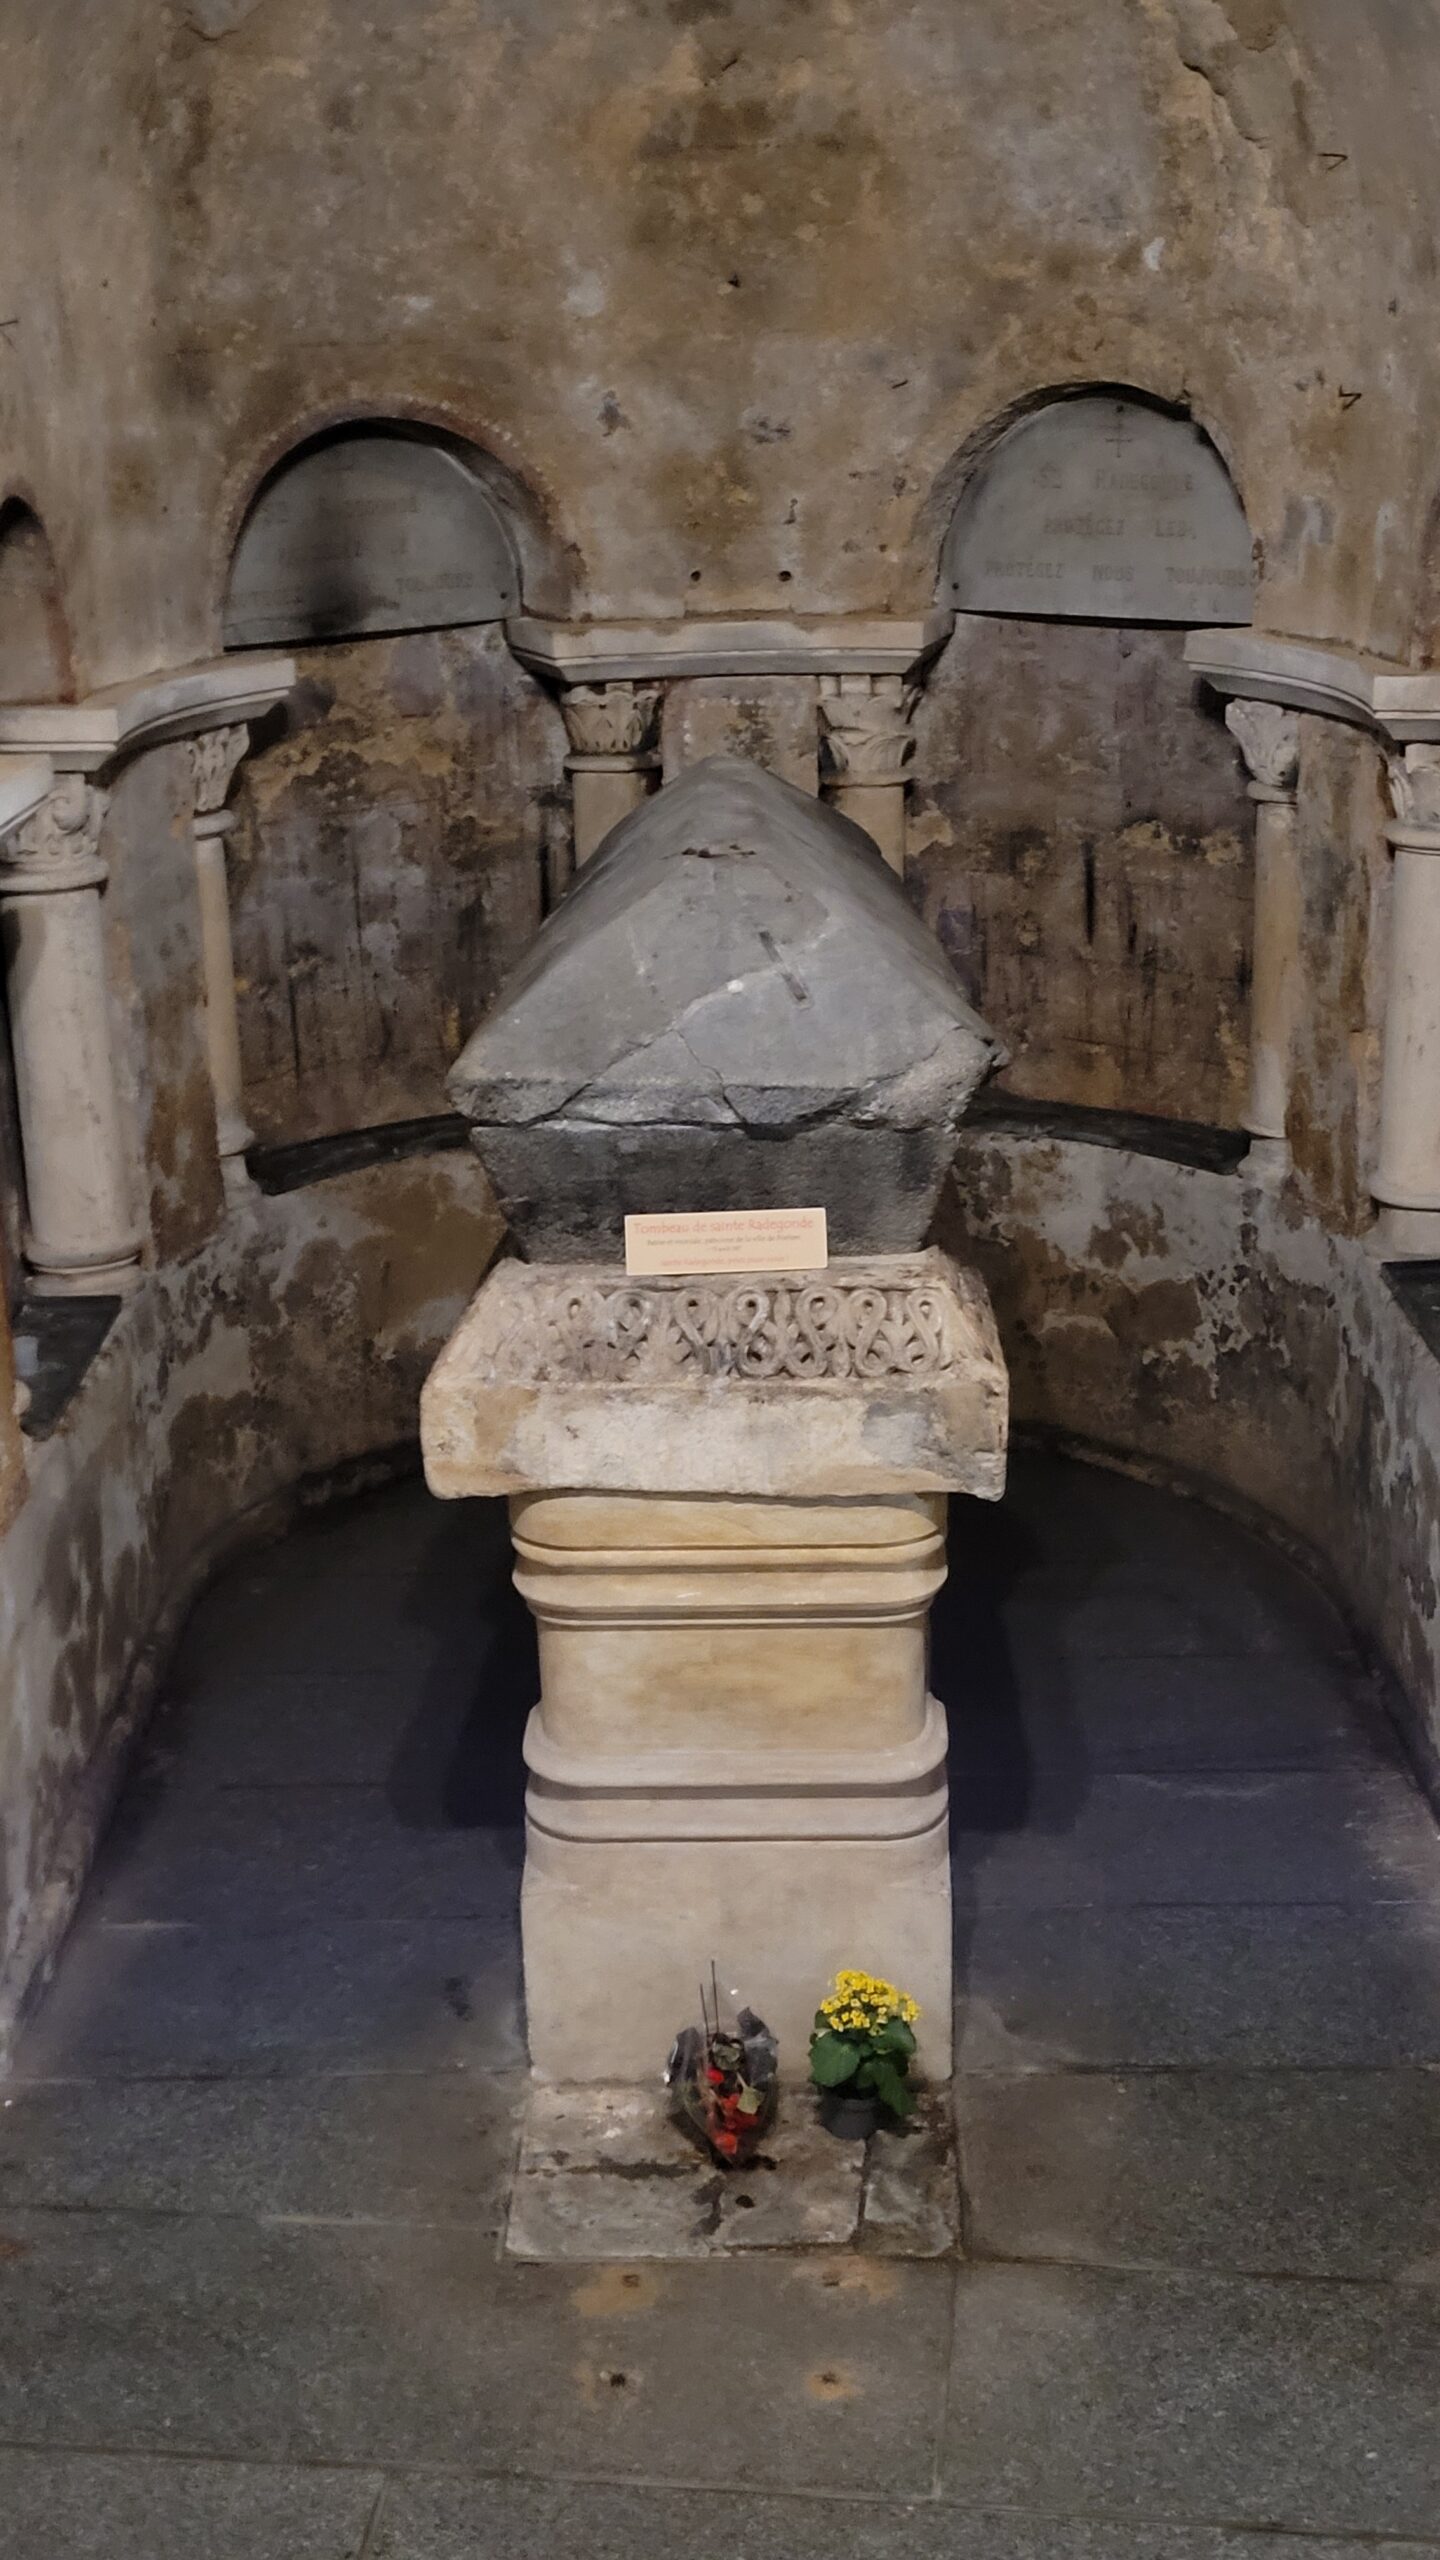 Le tombeau de Sainte-Radegonde